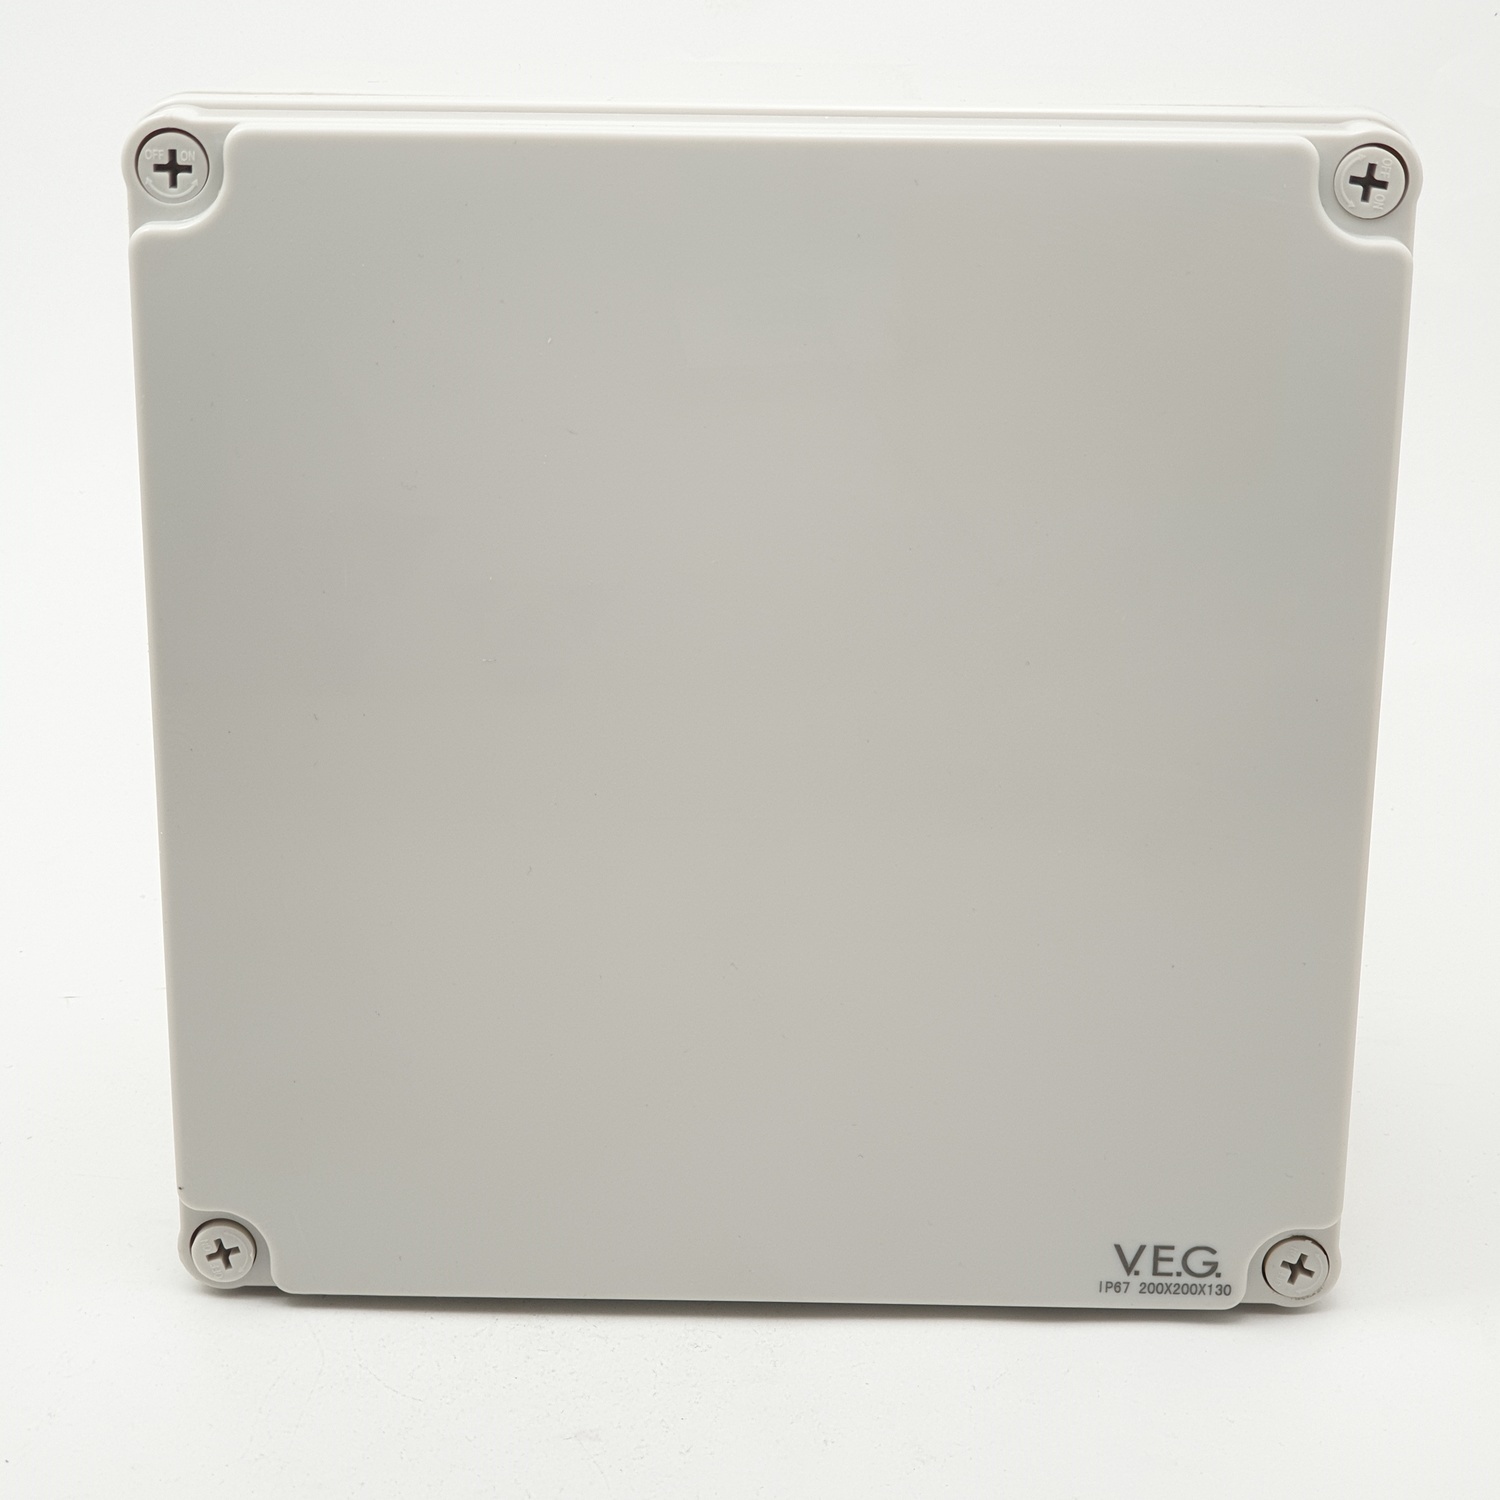 V.E.G. กล่องกันน้ำพลาสติก รุ่น THE-09 200×200×130mm สีเทา